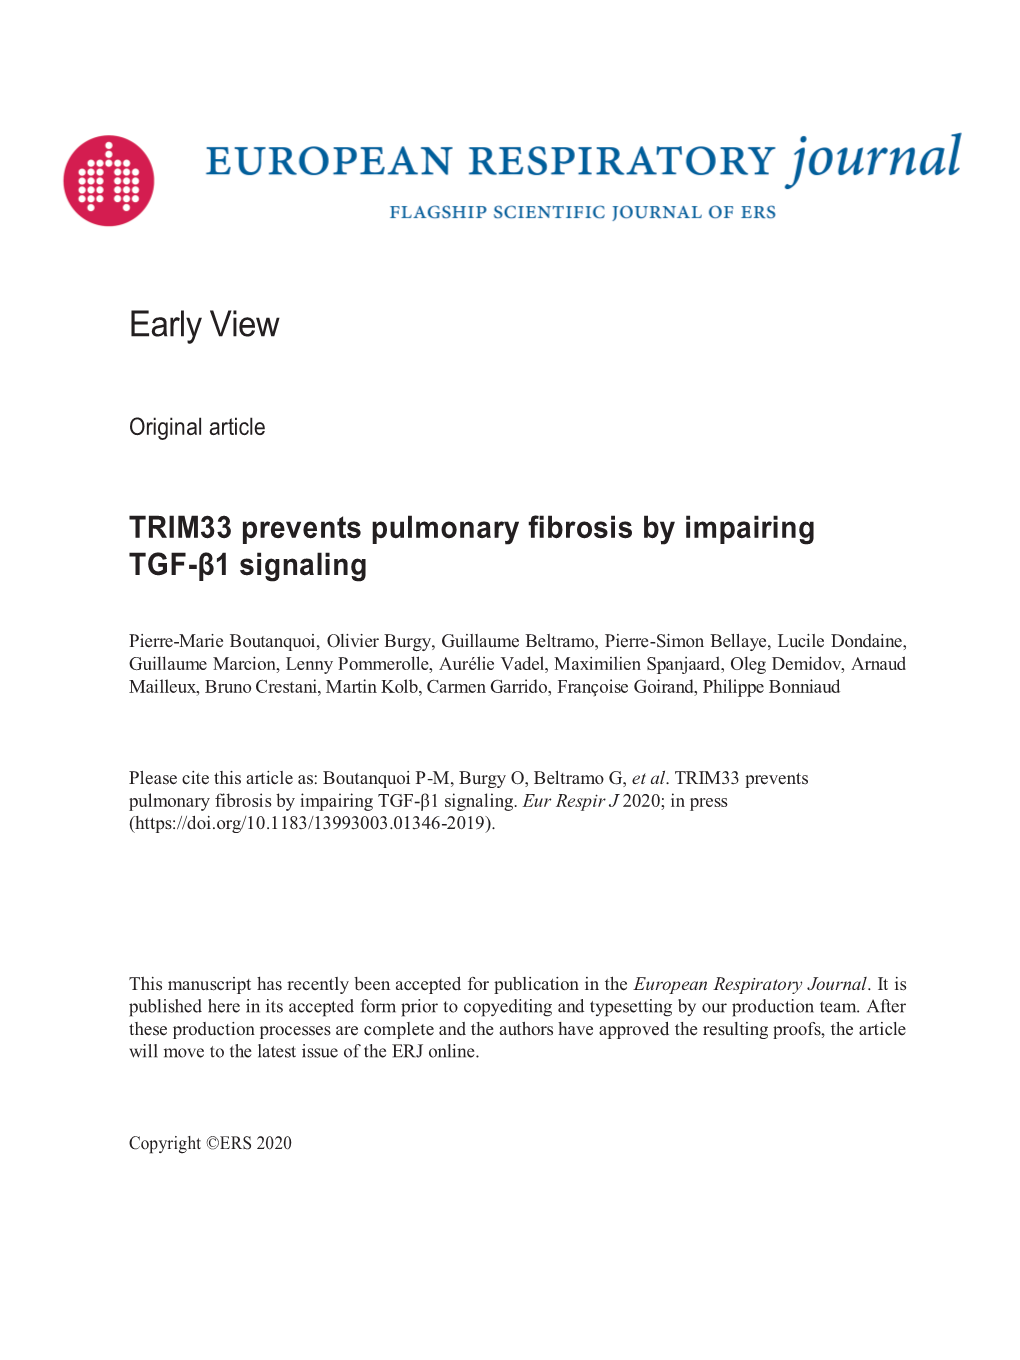 TRIM33 Prevents Pulmonary Fibrosis by Impairing TGF-Β1 Signaling